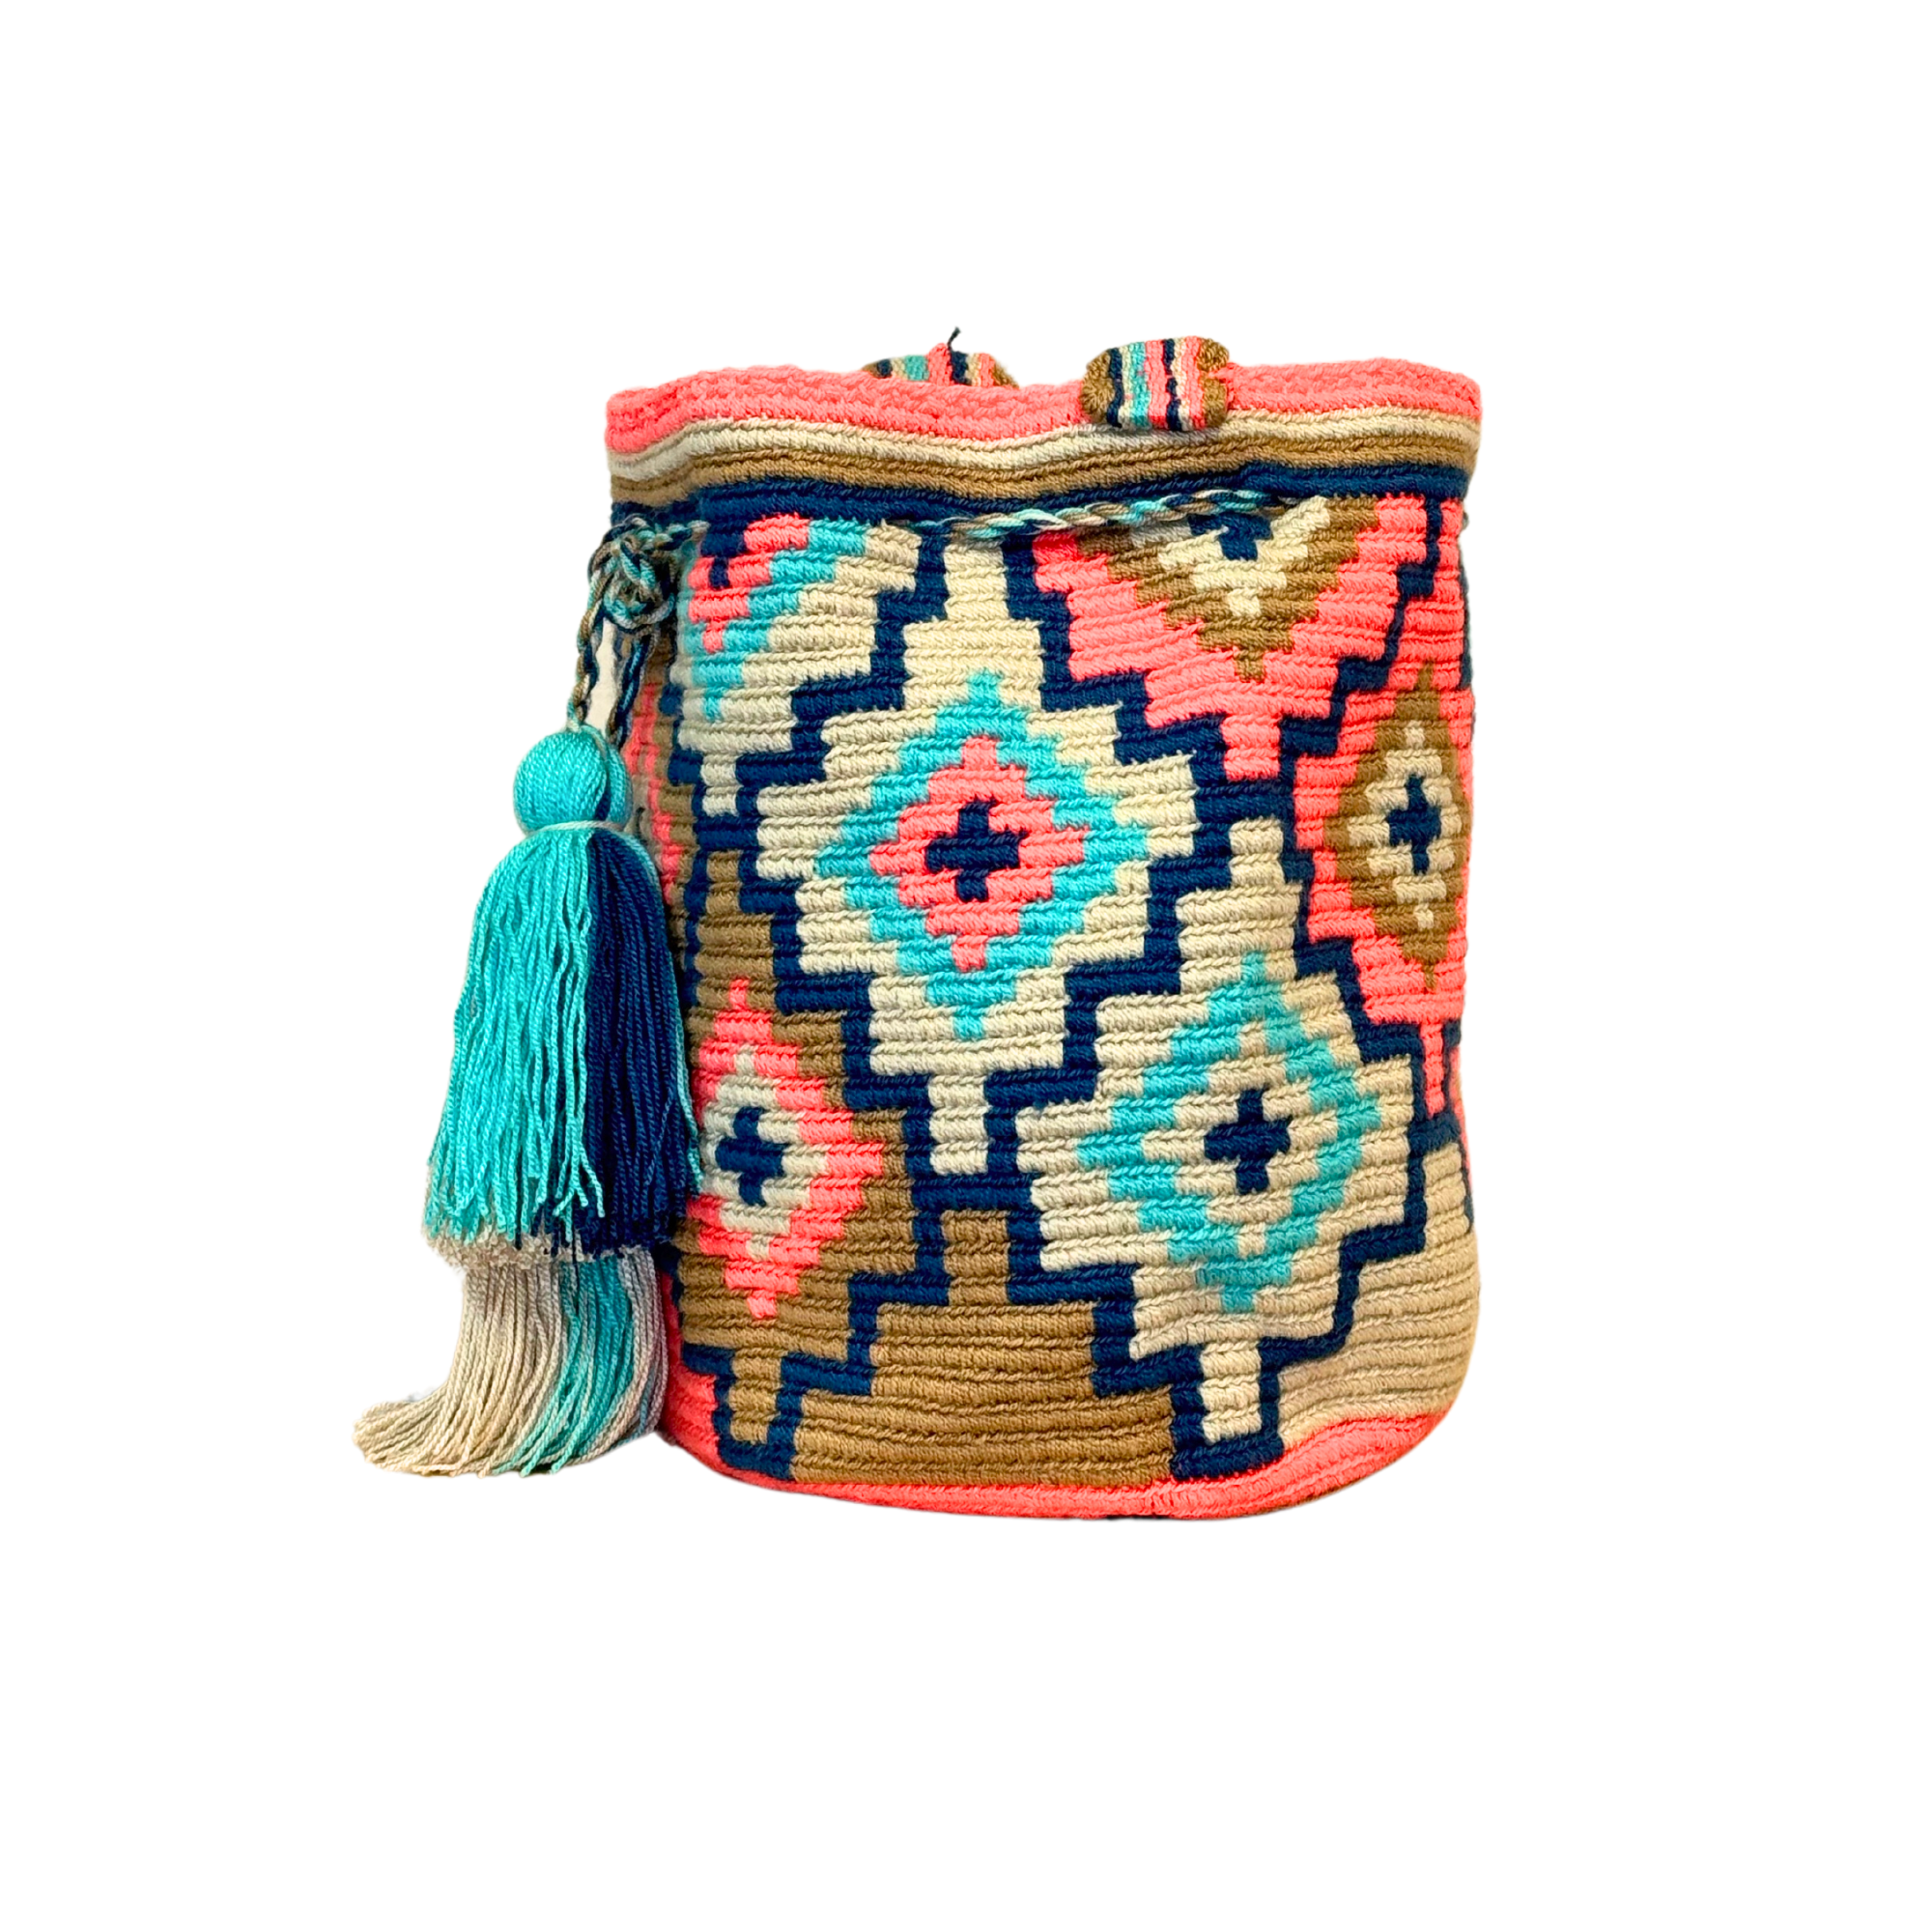 Wayuu mochila bag | Medium Traditional | Salmon, moss, beige and blue cross